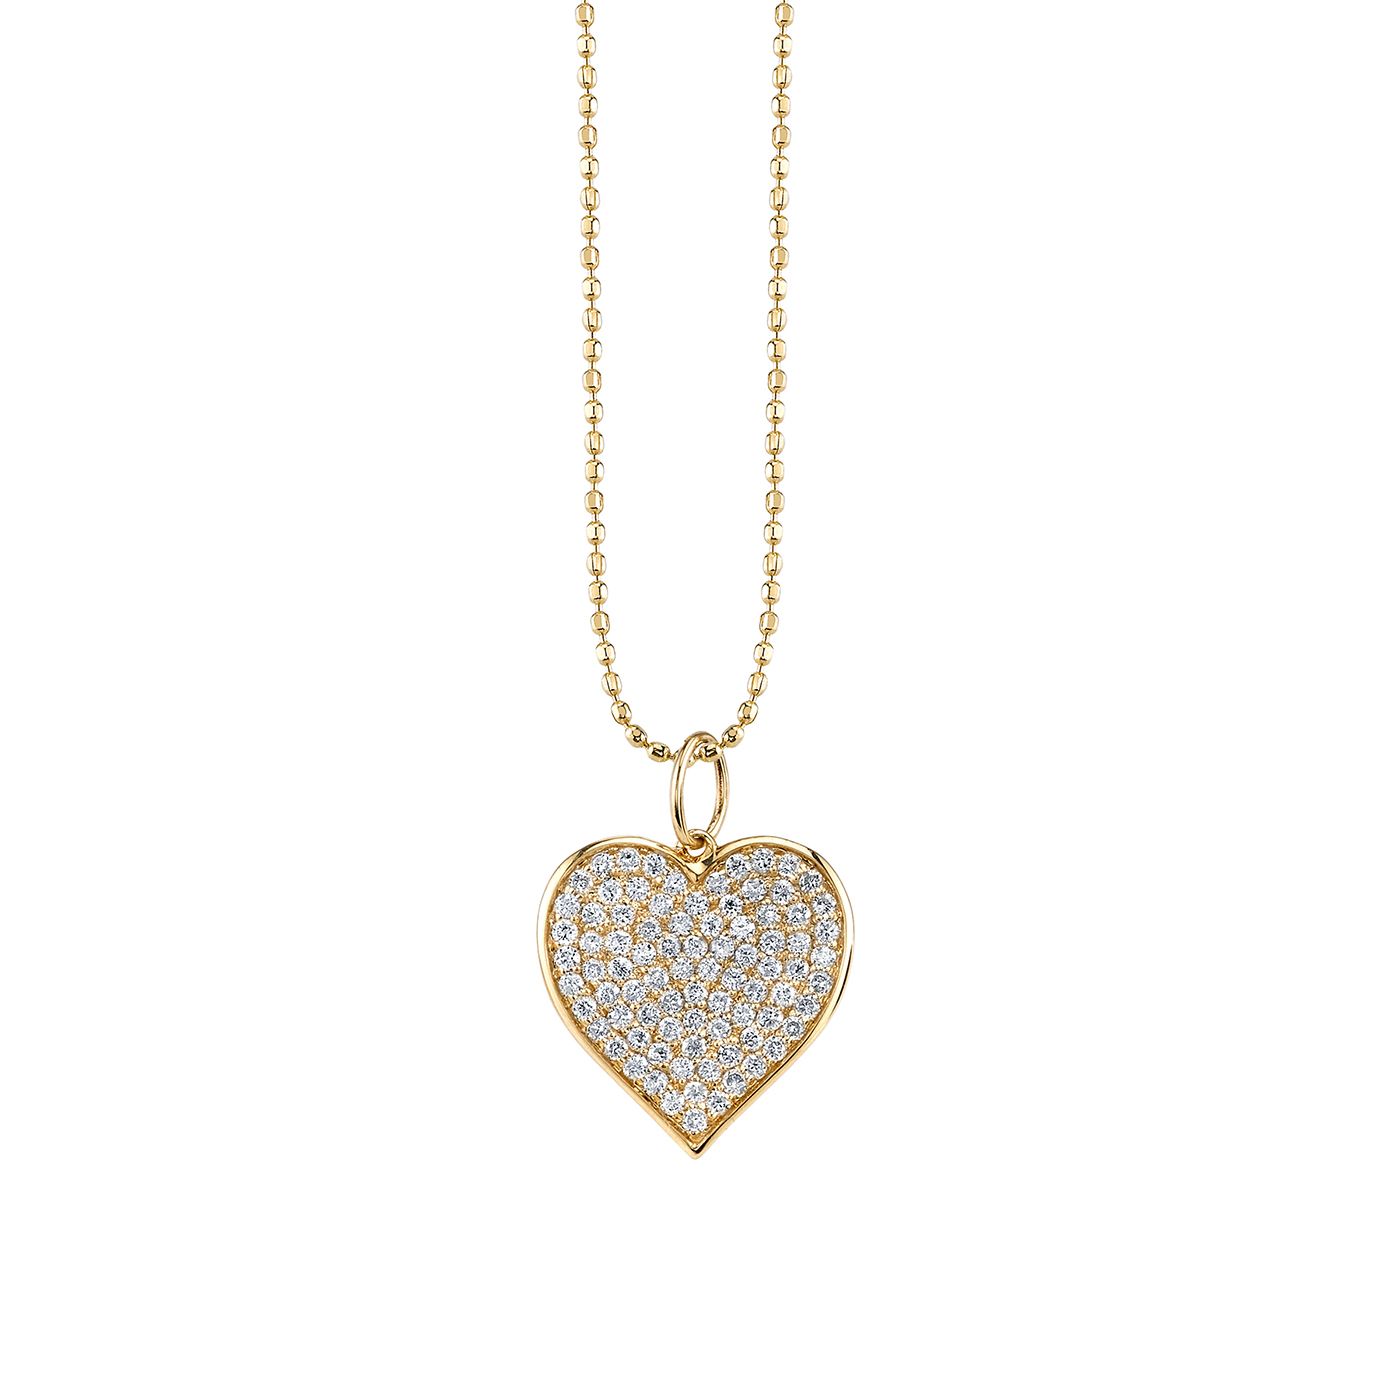 Heart pendant necklace adorned with pavé diamonds set in 14k gold